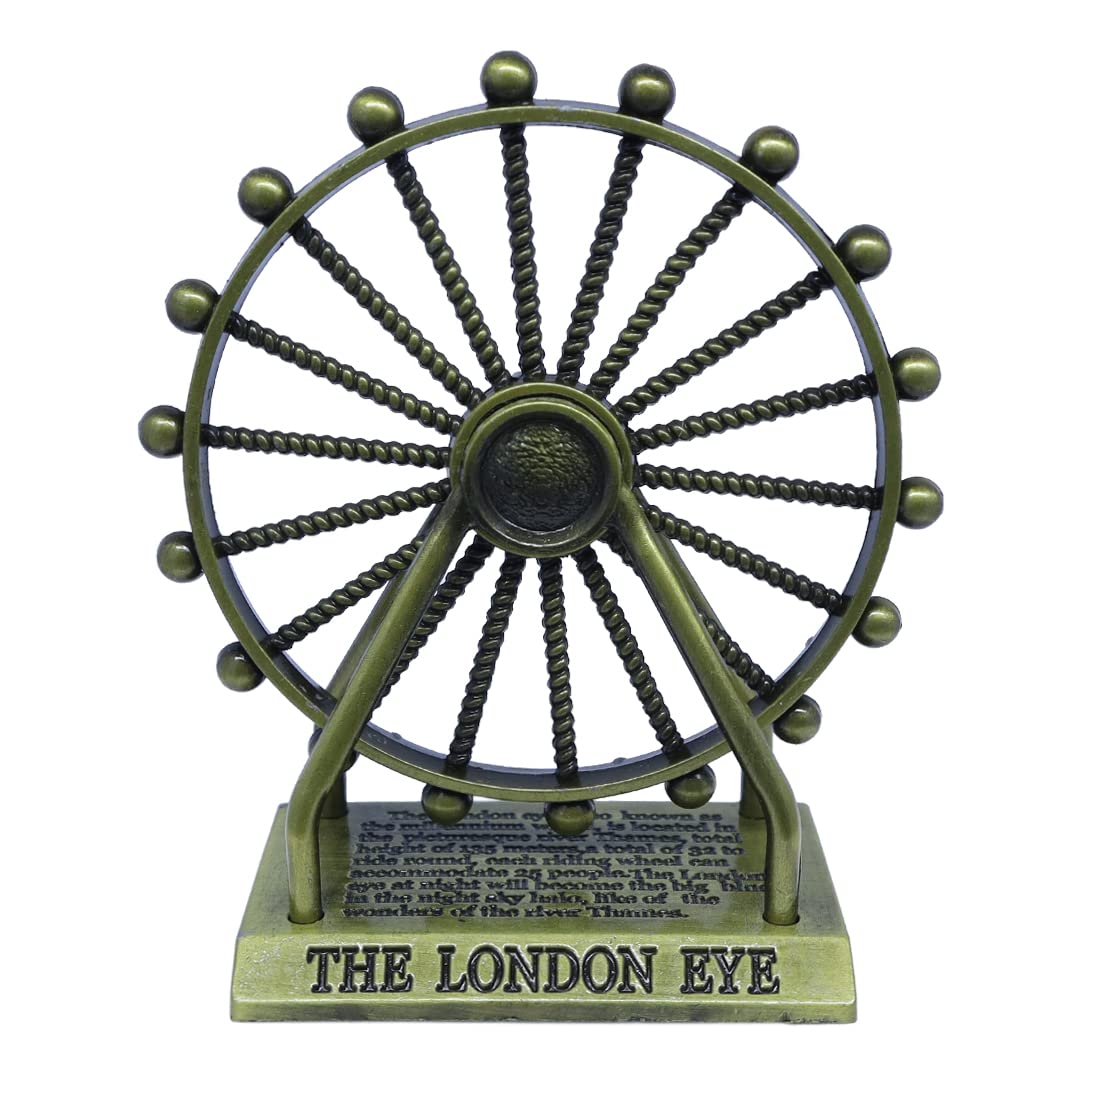 Decor London Eye Rotating Ferris Wheel Souvenir Statue Home Office Decor Showpiece